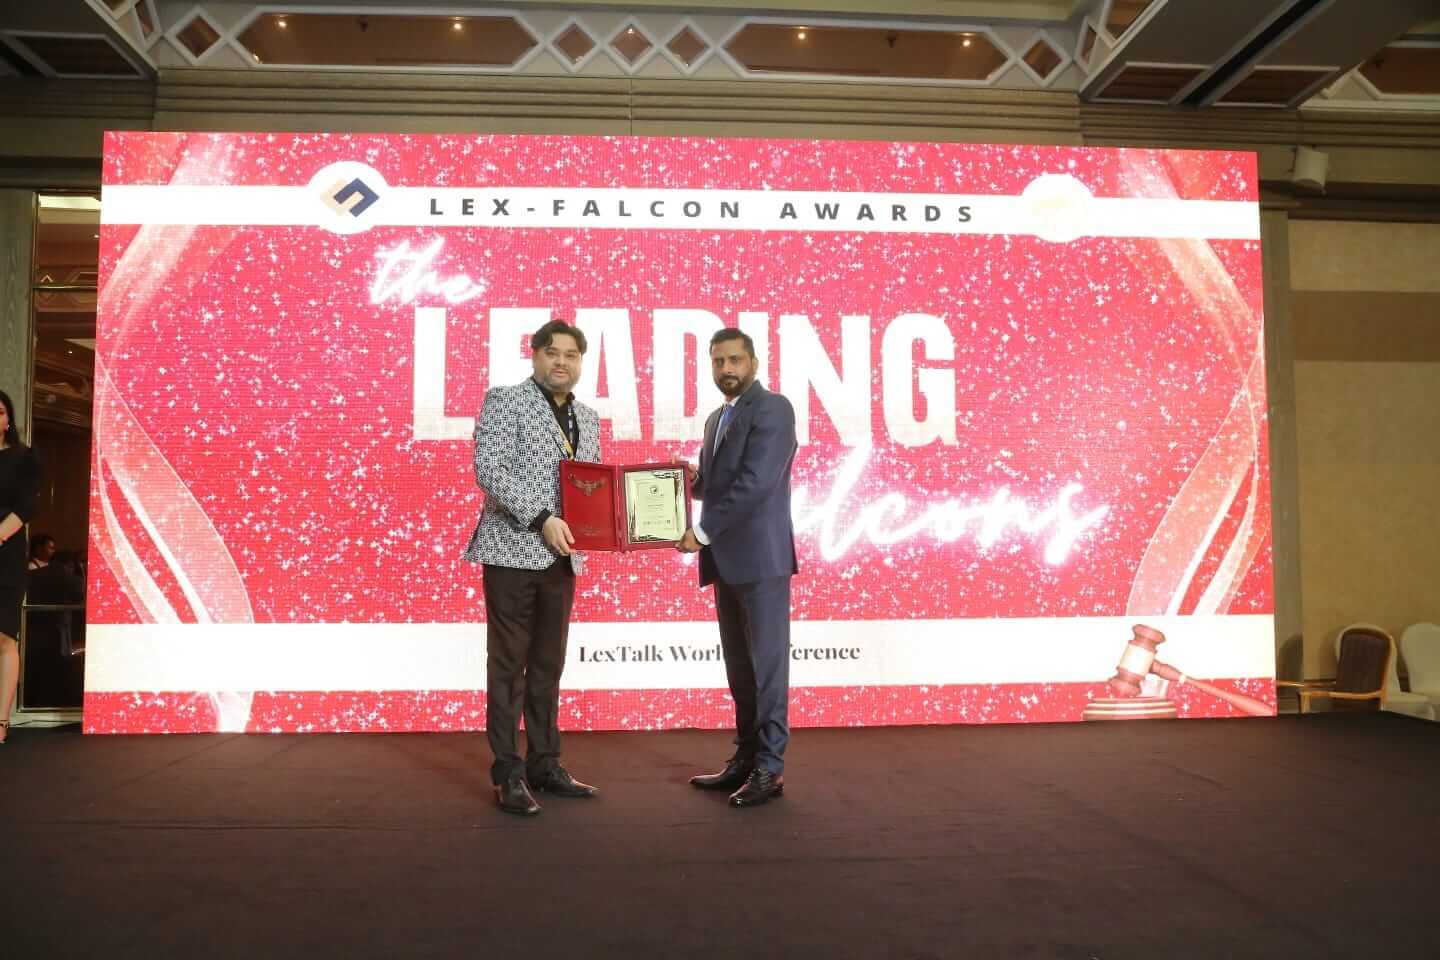 Nitin Khare Wins Prestigious LexFalcon Award as the “Leading Legal